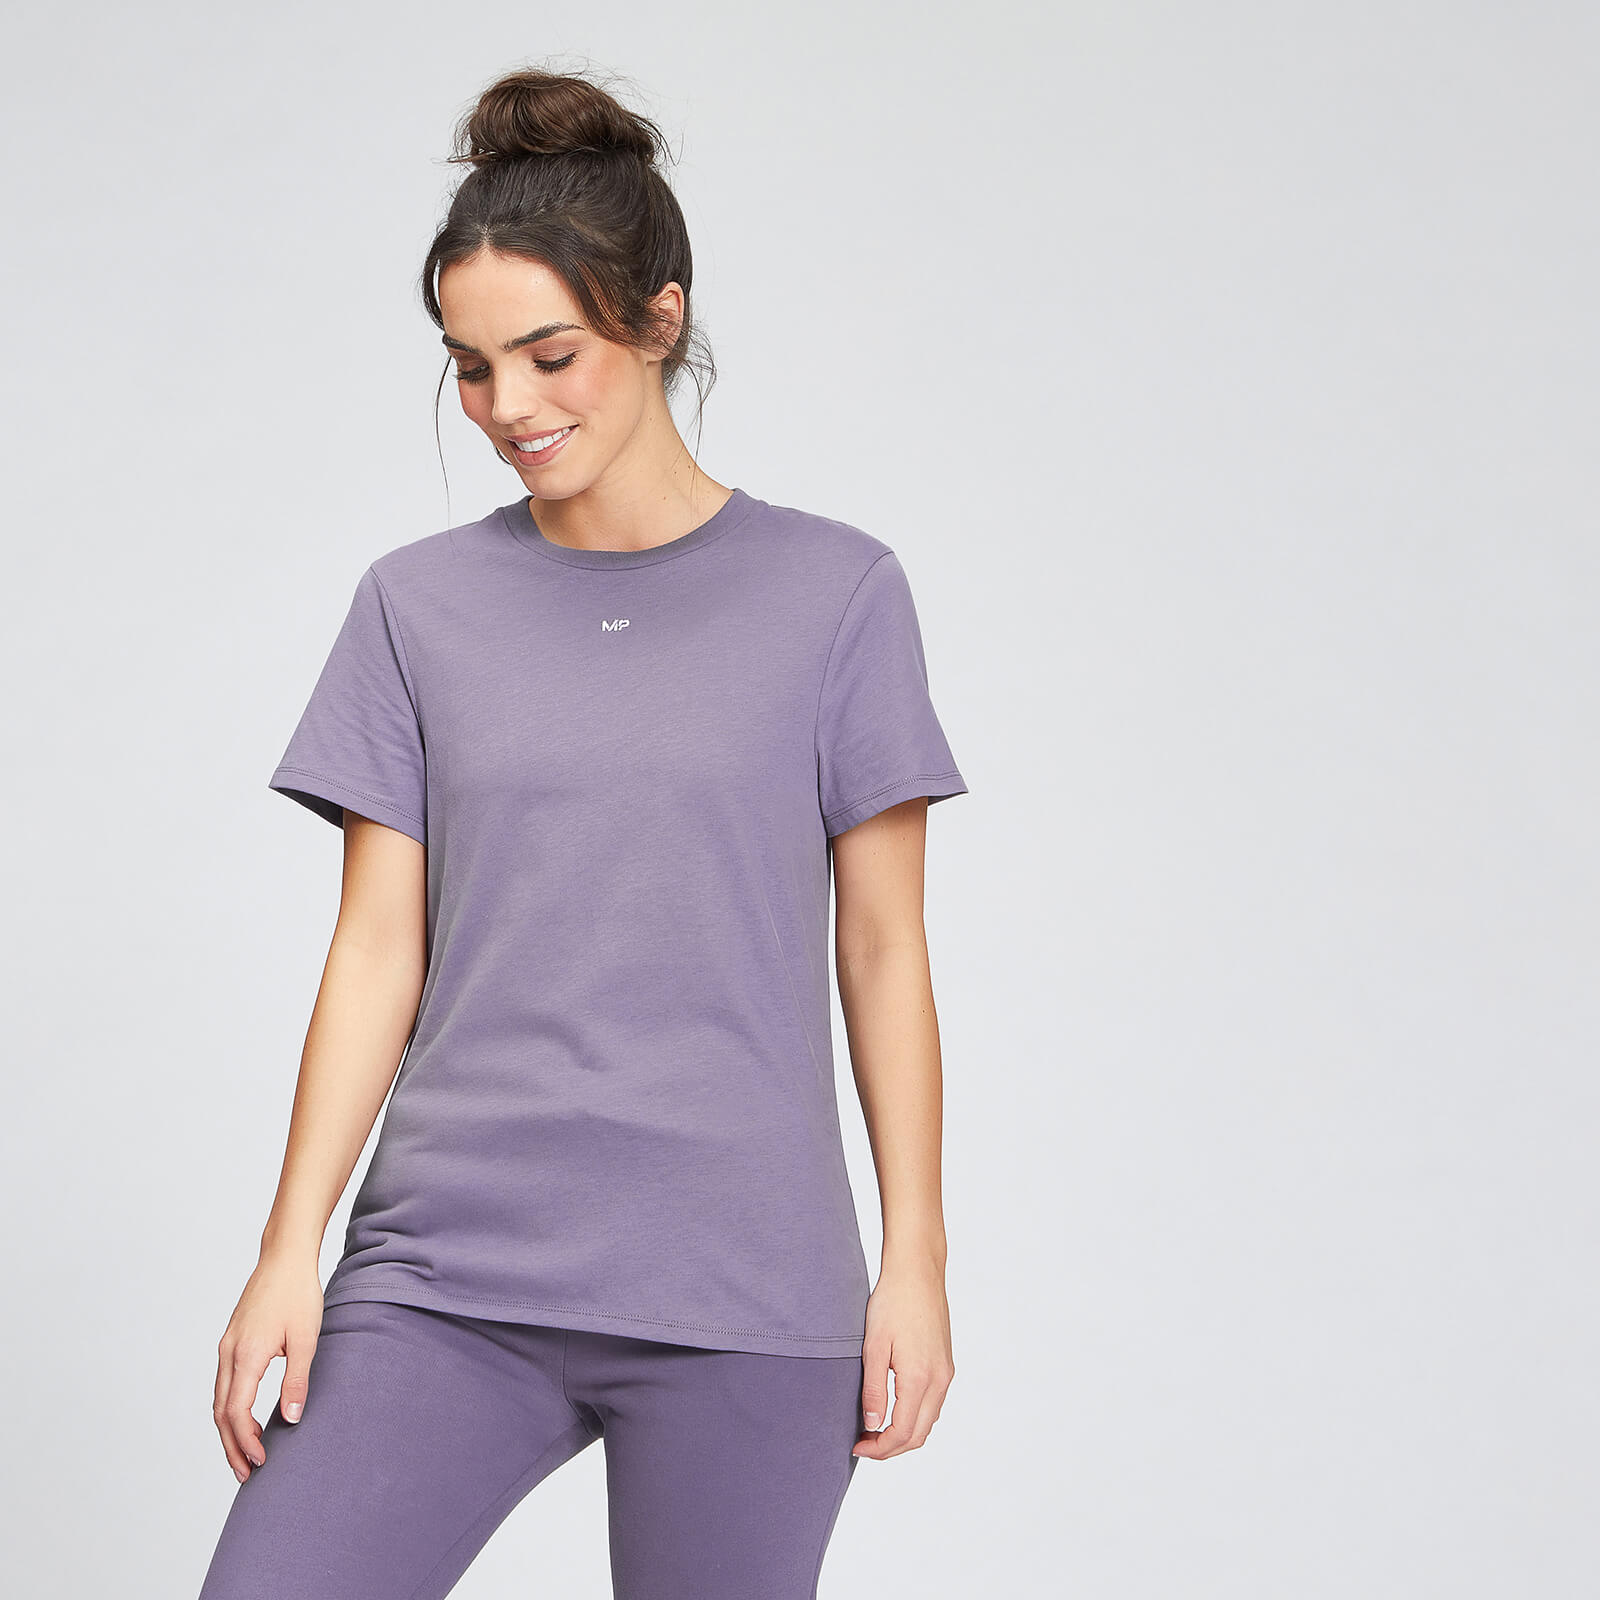 MP Women's Essentials T-Shirt - Smokey Purple